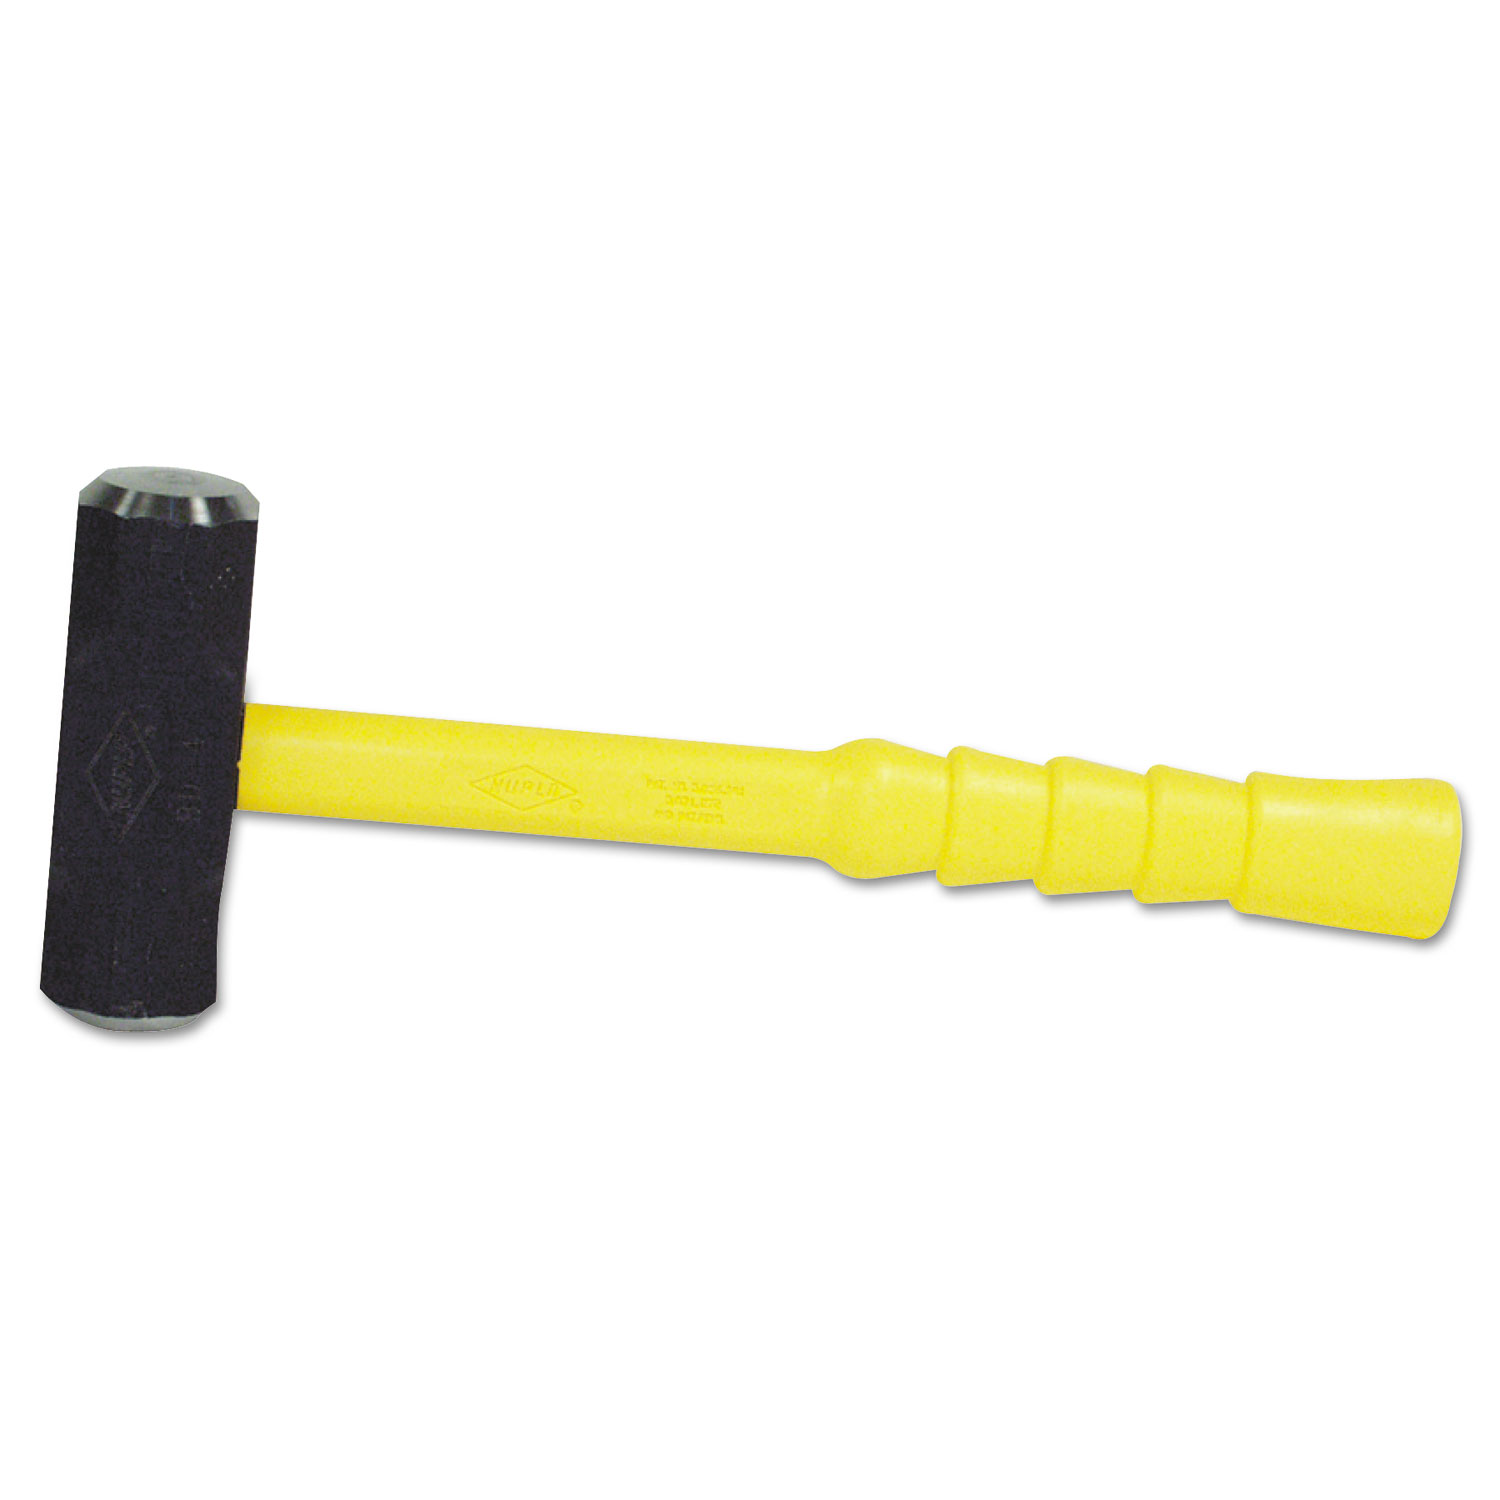 Ergo-Power Slugging Hammer, 8lb, 16 Handle